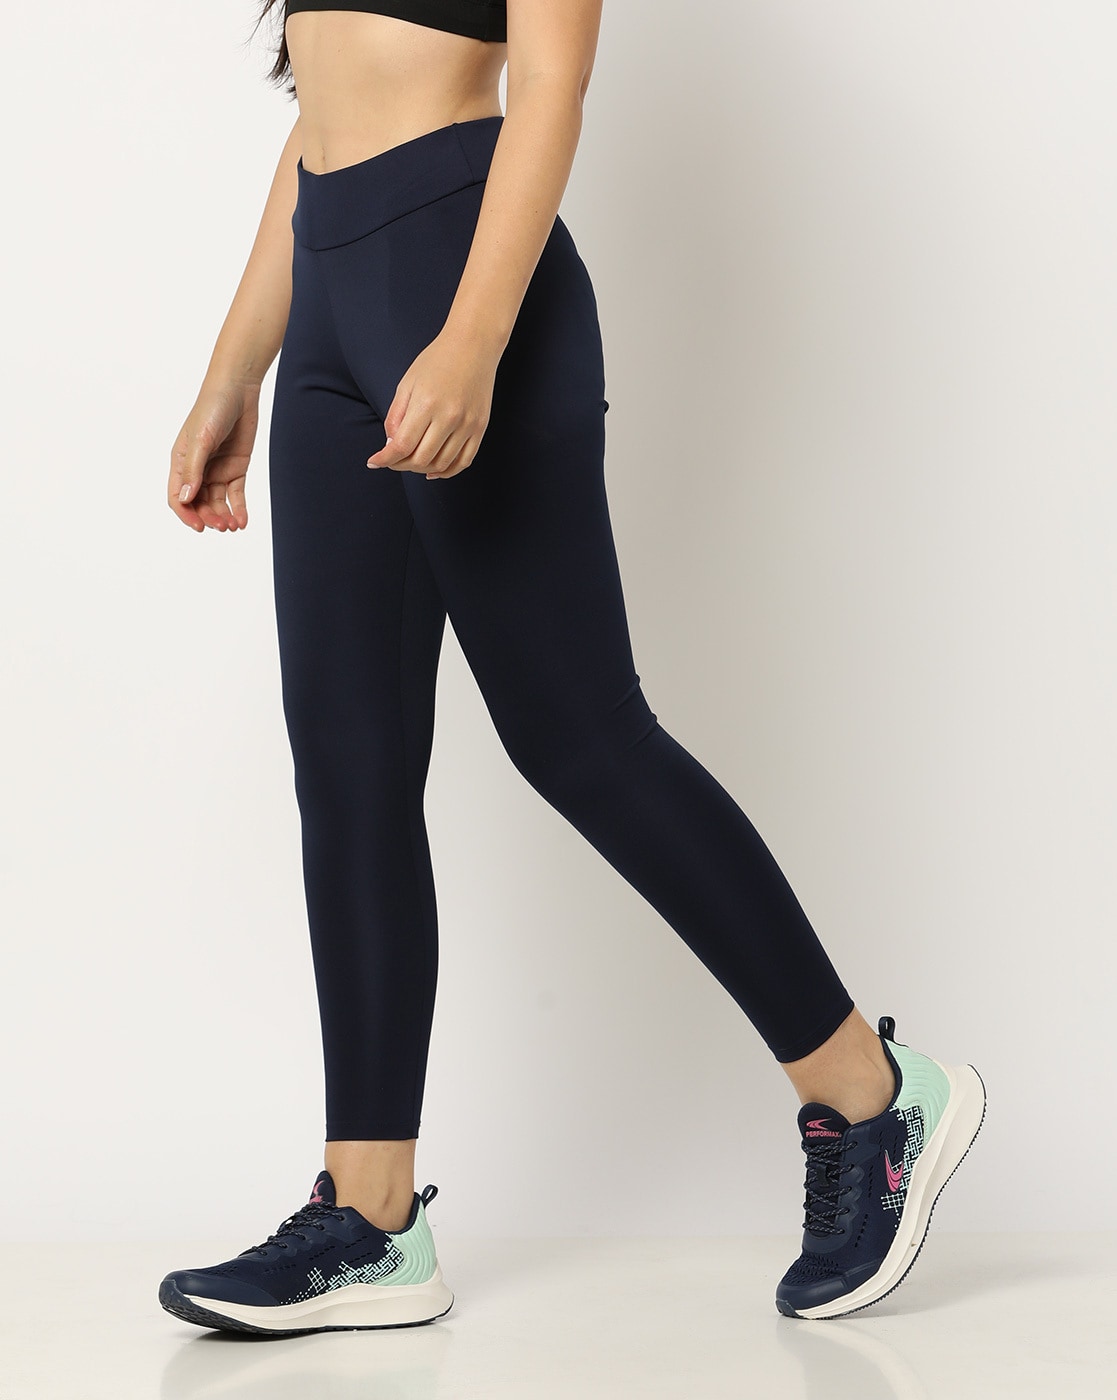 NELEUS Womens Yoga Running Leggings with Pocket Tummy Control High Waist, Black+Gray+NavyBlue,US Size S - Walmart.com